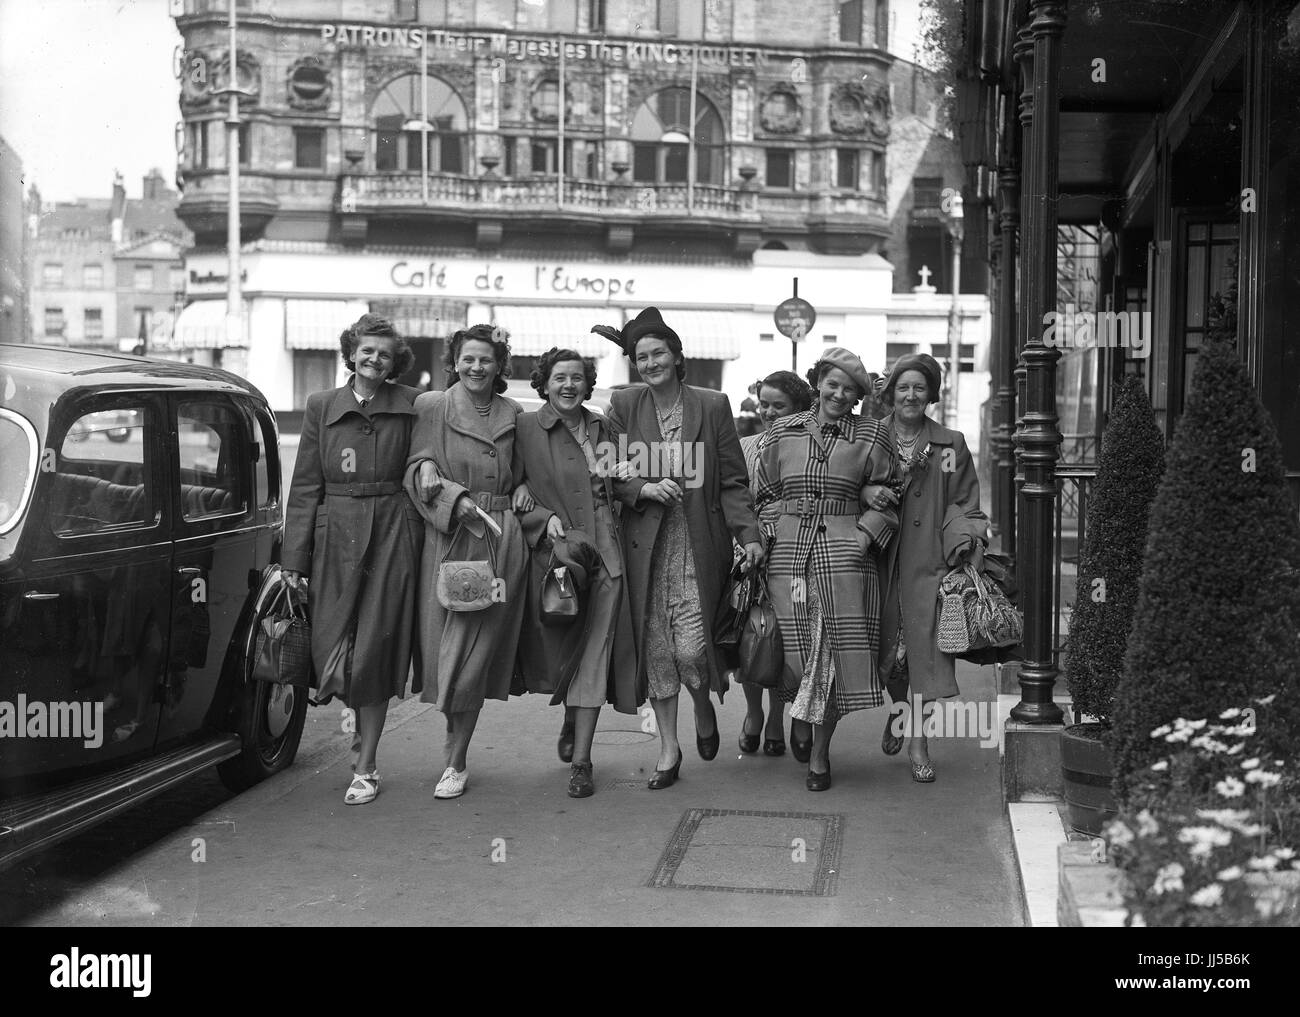 Mädels-Tag auf dem Leicester Square, London 1949. Stockfoto